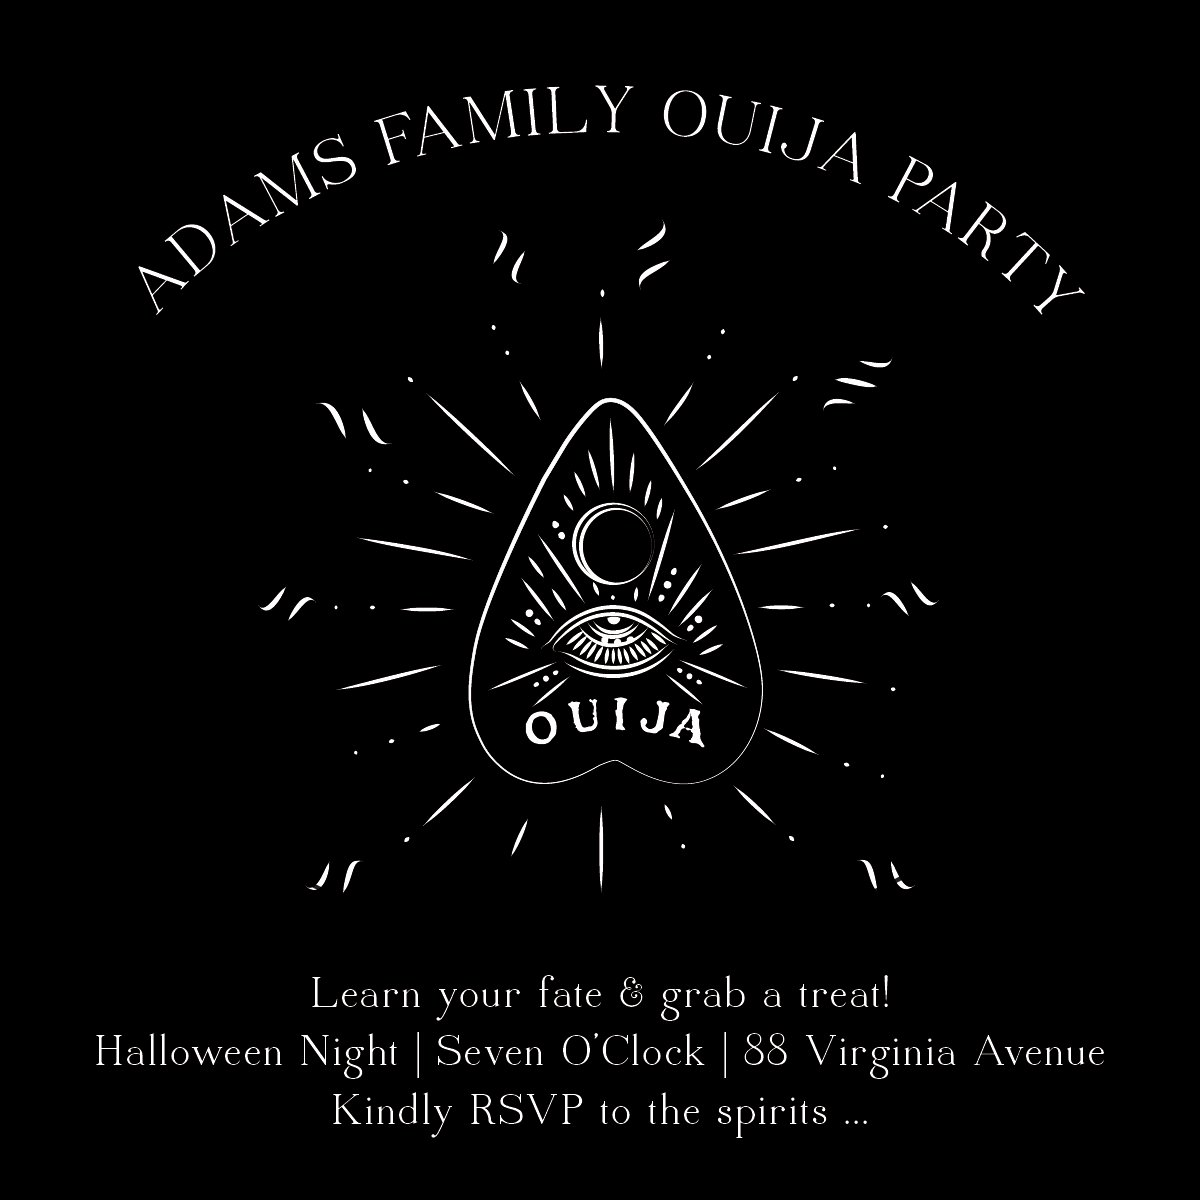 Ouija party